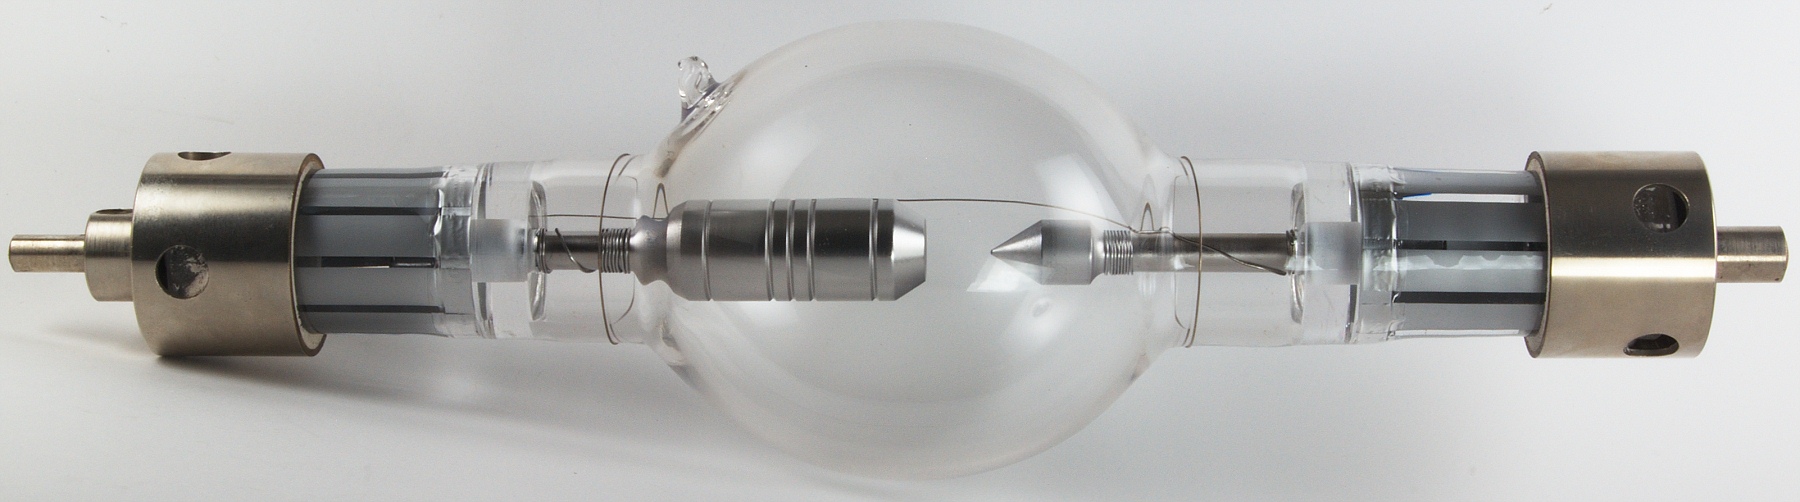 10,000 Watt Xenon Short Arc Lamp